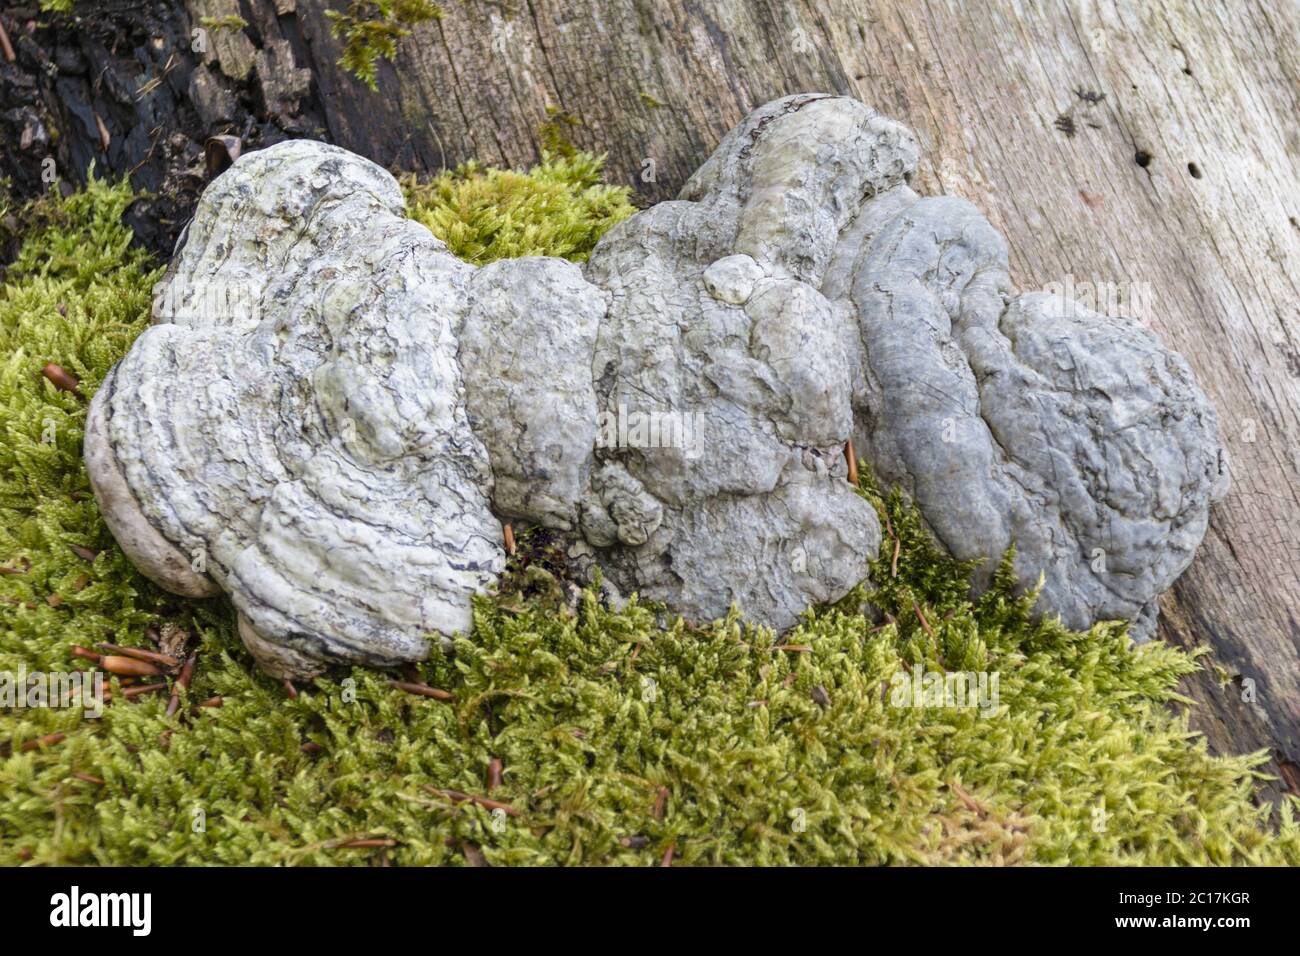 Tinder swam (Fomes fomentarius) tree mushroom Stock Photo